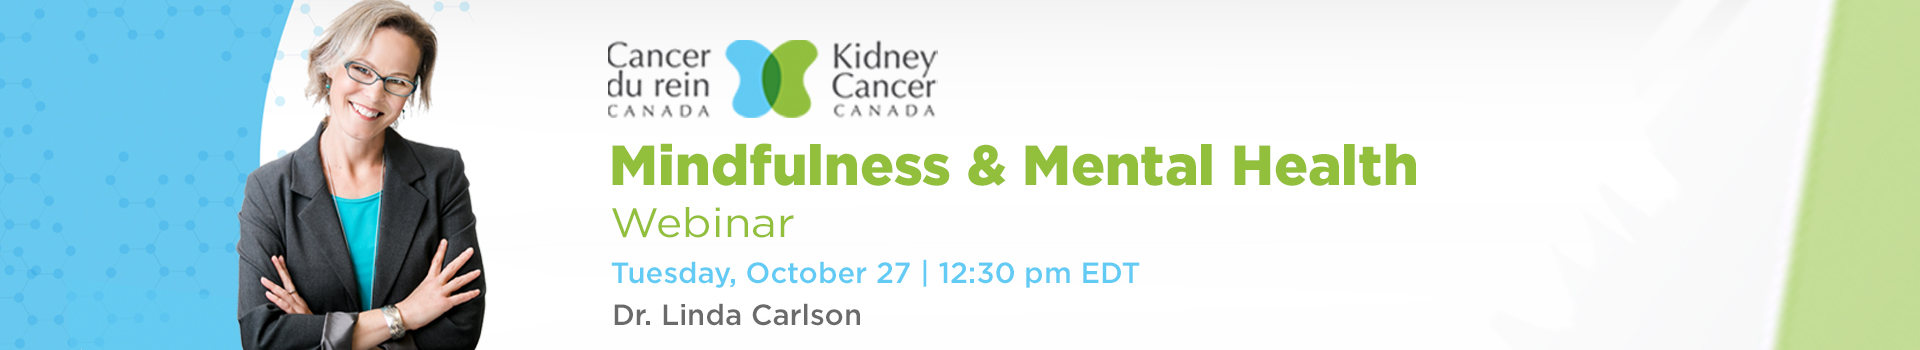 Dr. Linda Carlson - Kidney Cancer Canada Webinar Mindfulness & Mental Health